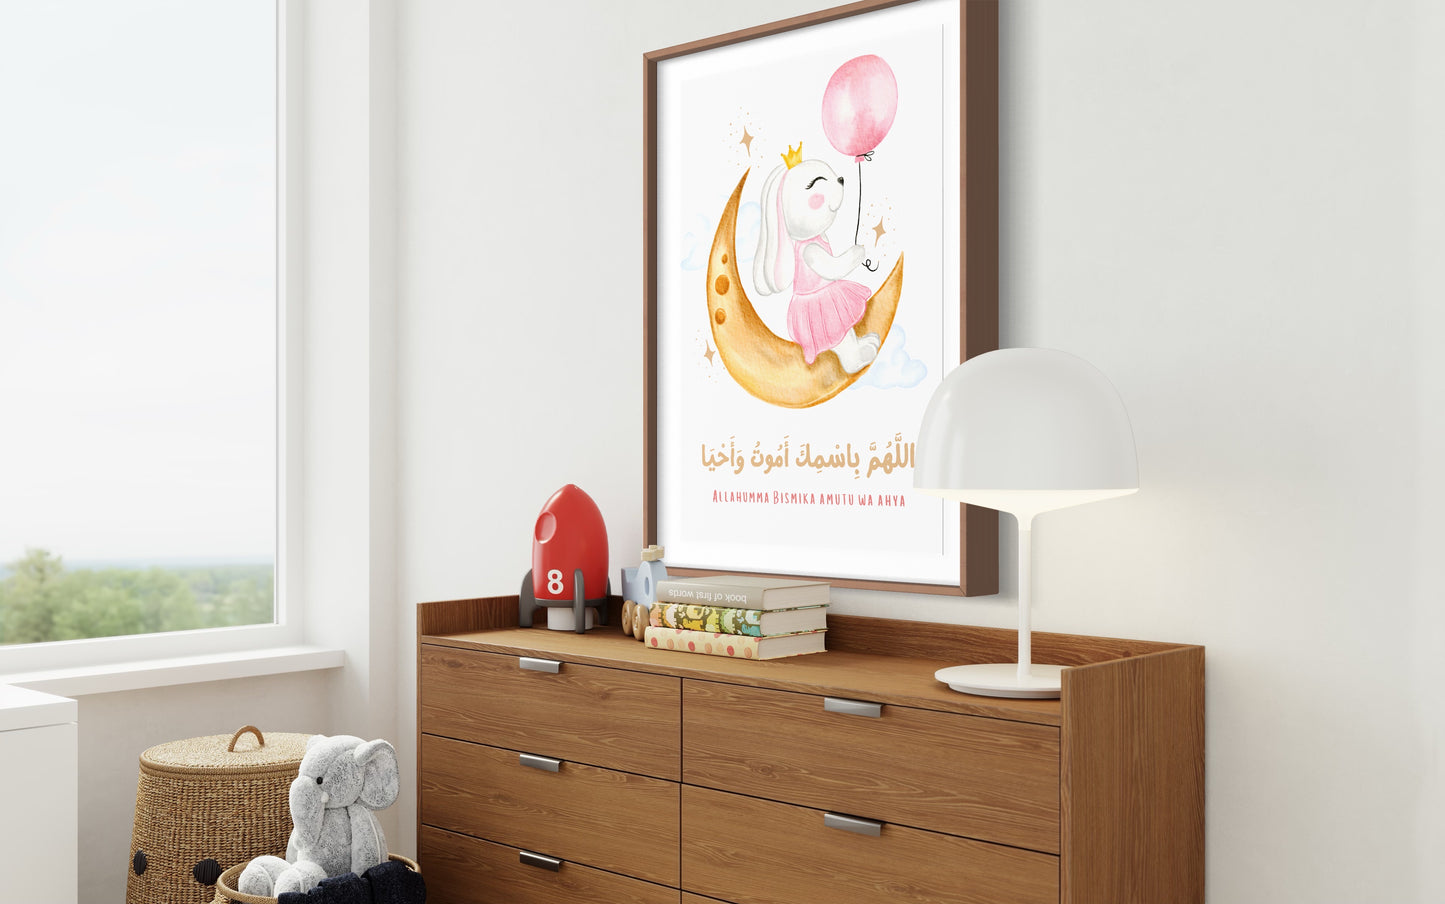 Bunny Dreams: Islamic Children's Print